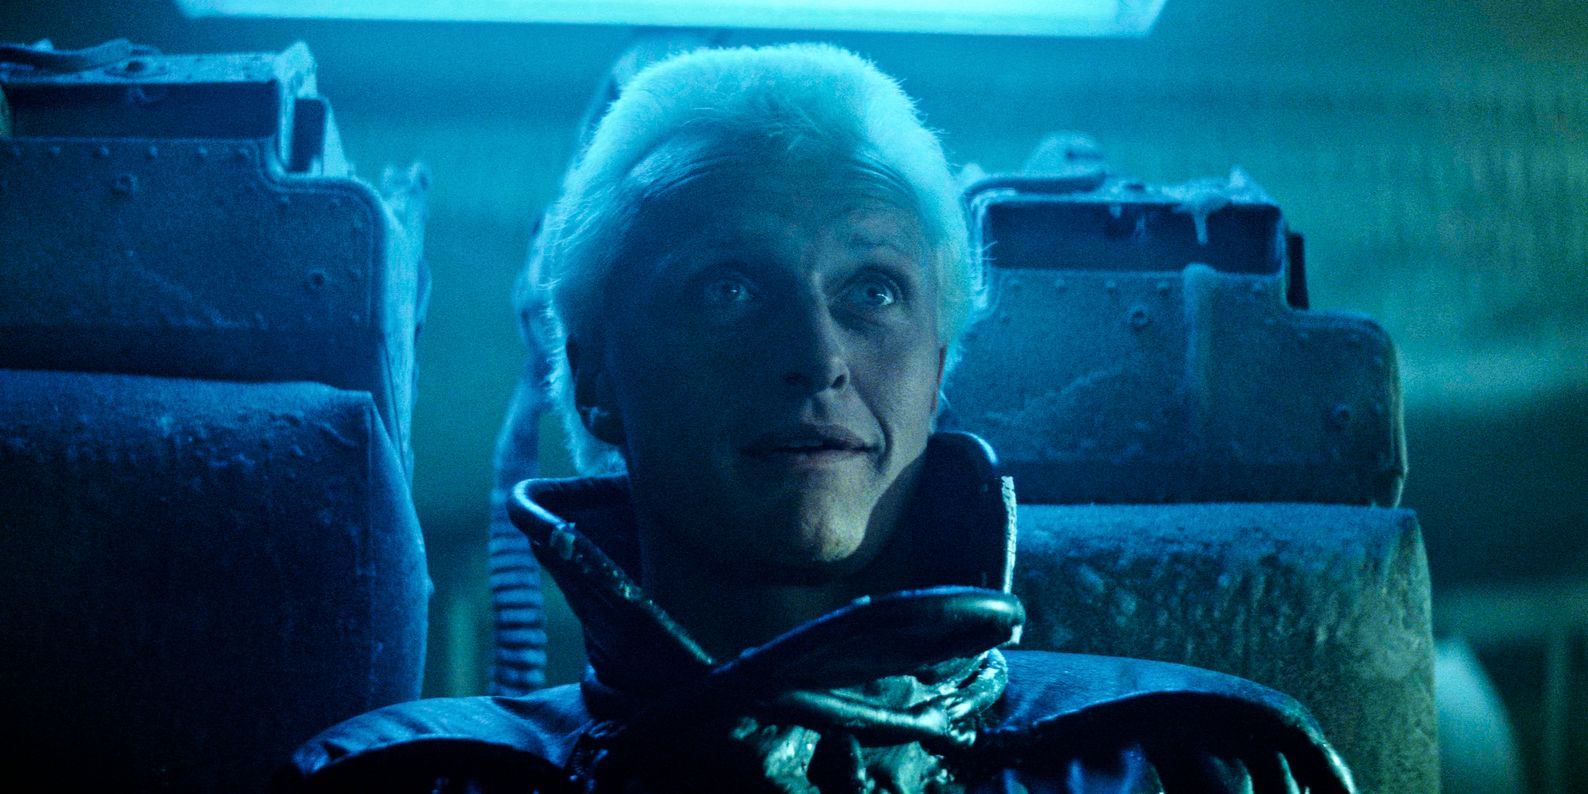 Replicant Roy Batty in Blade Runner